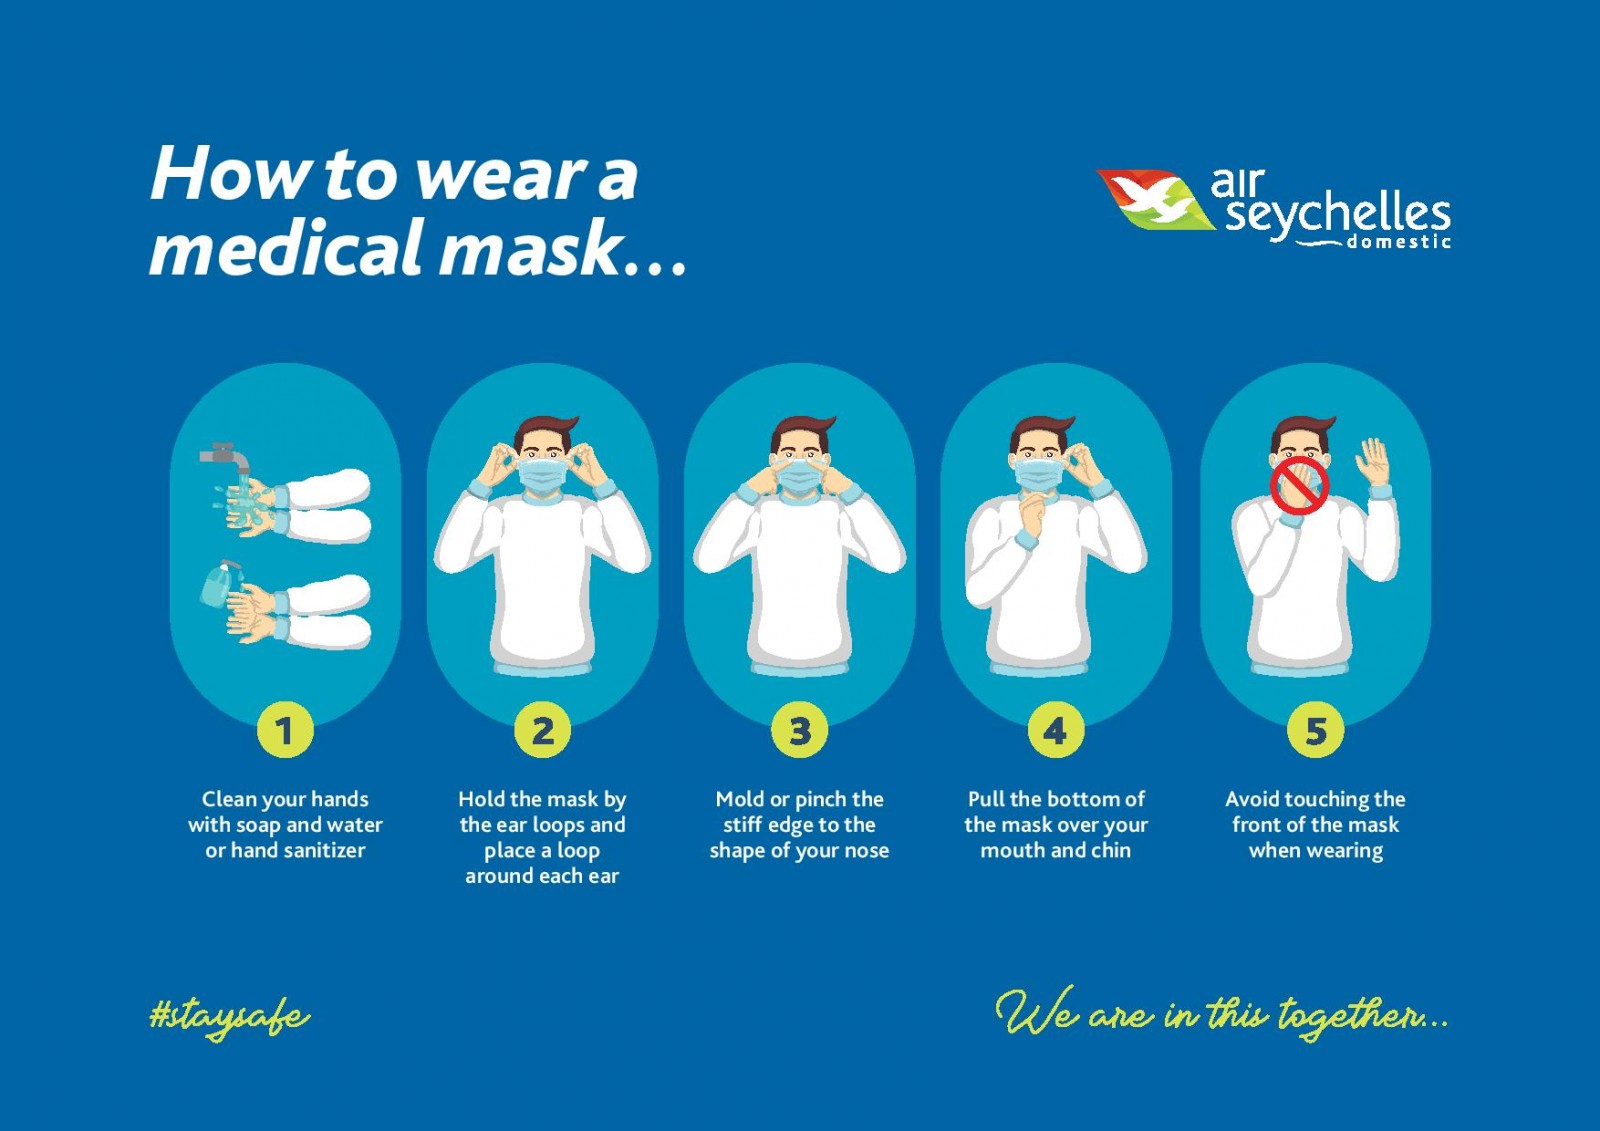 Air Seychelles - How to wear a Mask.jpg